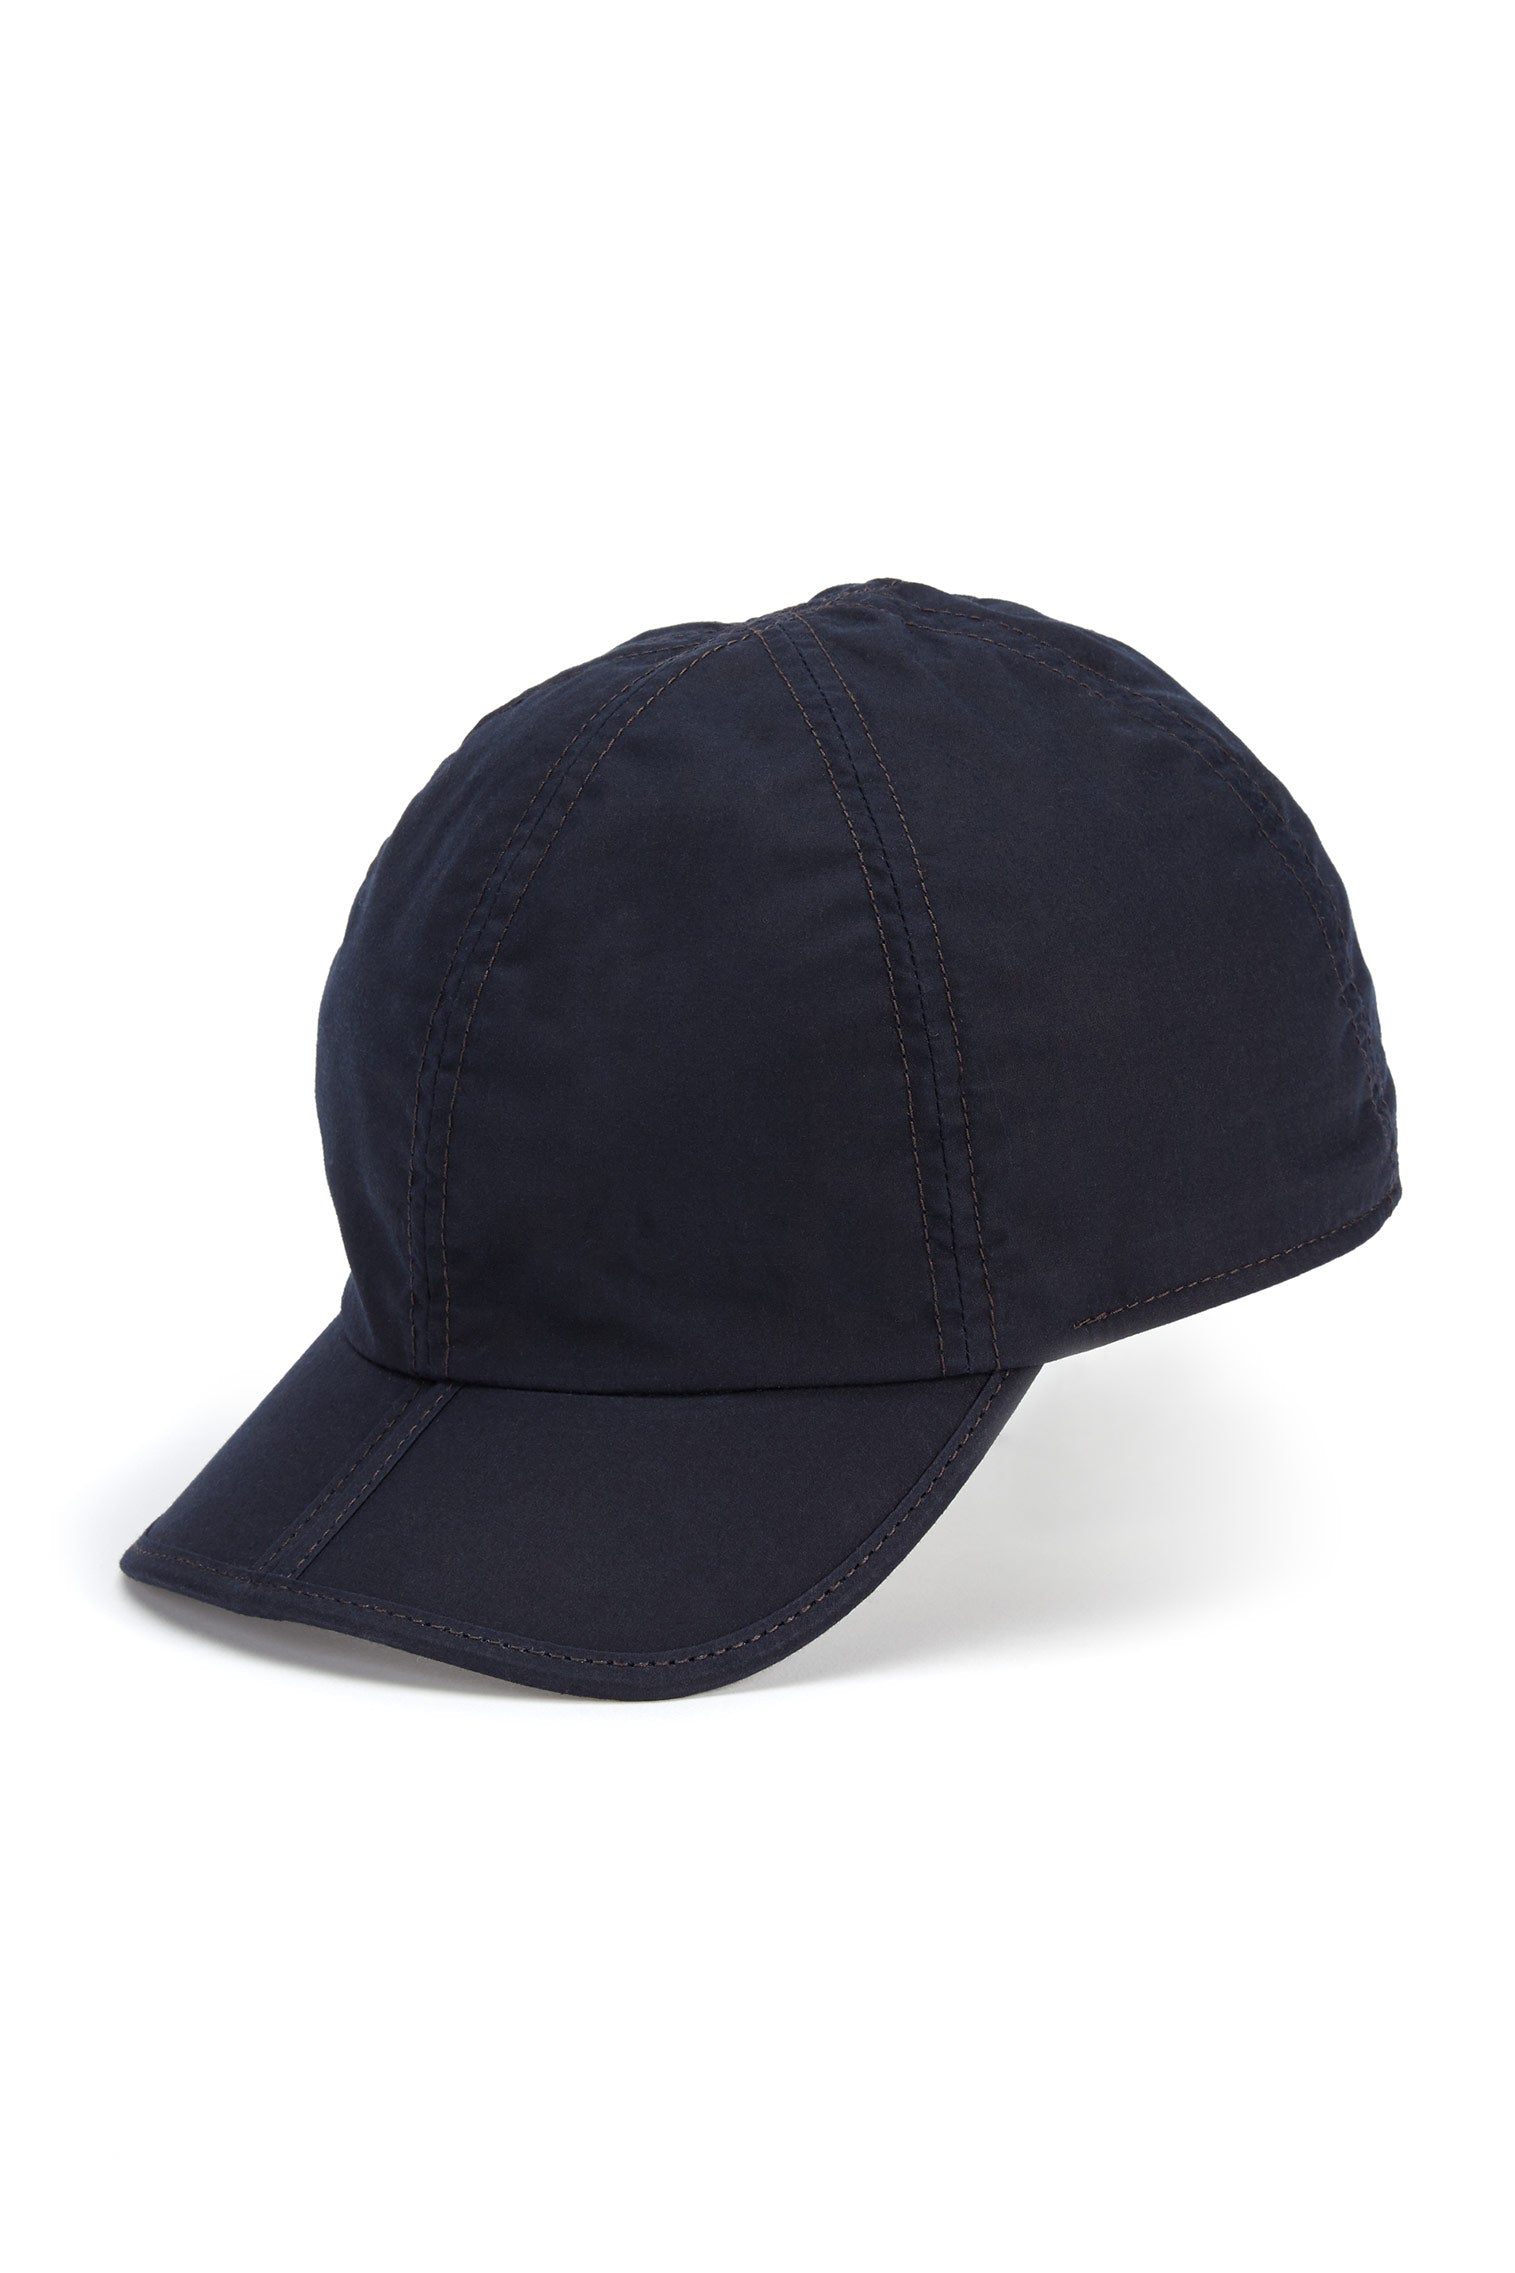 Folding Wax Baseball Cap - Hats for Tall People - Lock & Co. Hatters London UK